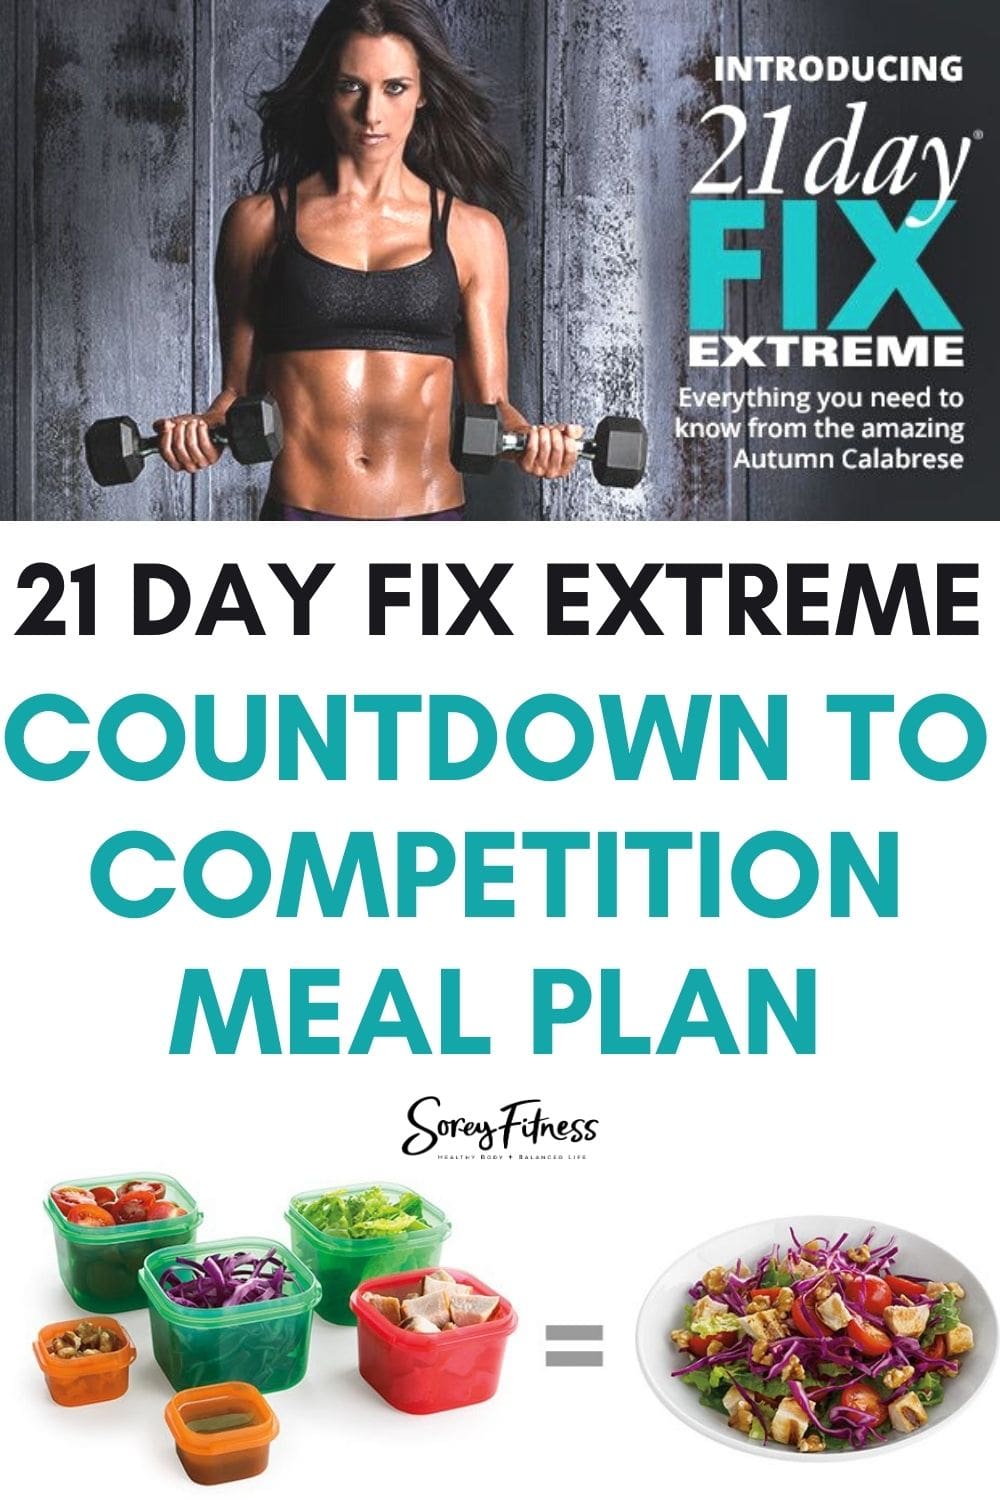 https://soreyfitness.com/wp-content/uploads/2021/03/21-day-fix-extreme-meal-plan-min.jpg